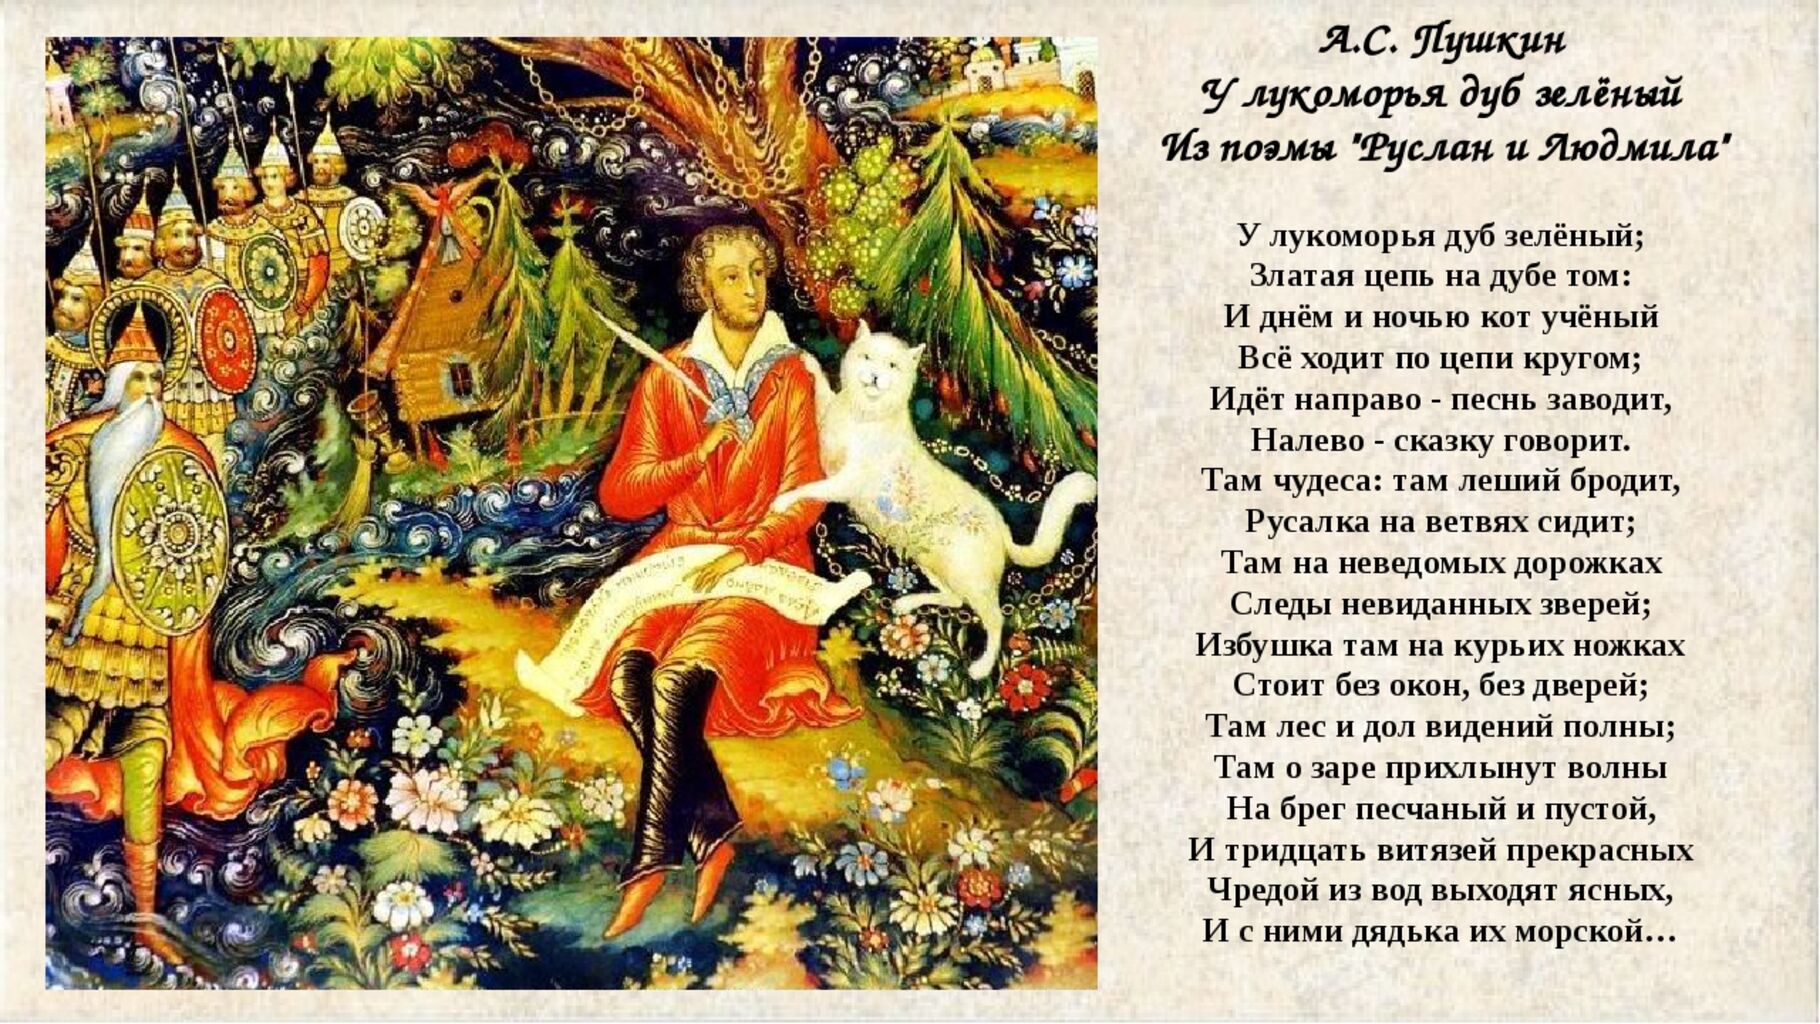 Сказочная поэзия. Пушкин а.с. "у Лукоморья дуб зеленый...". Пушкин у Лукоморья дуб зеленый златая цепь на.